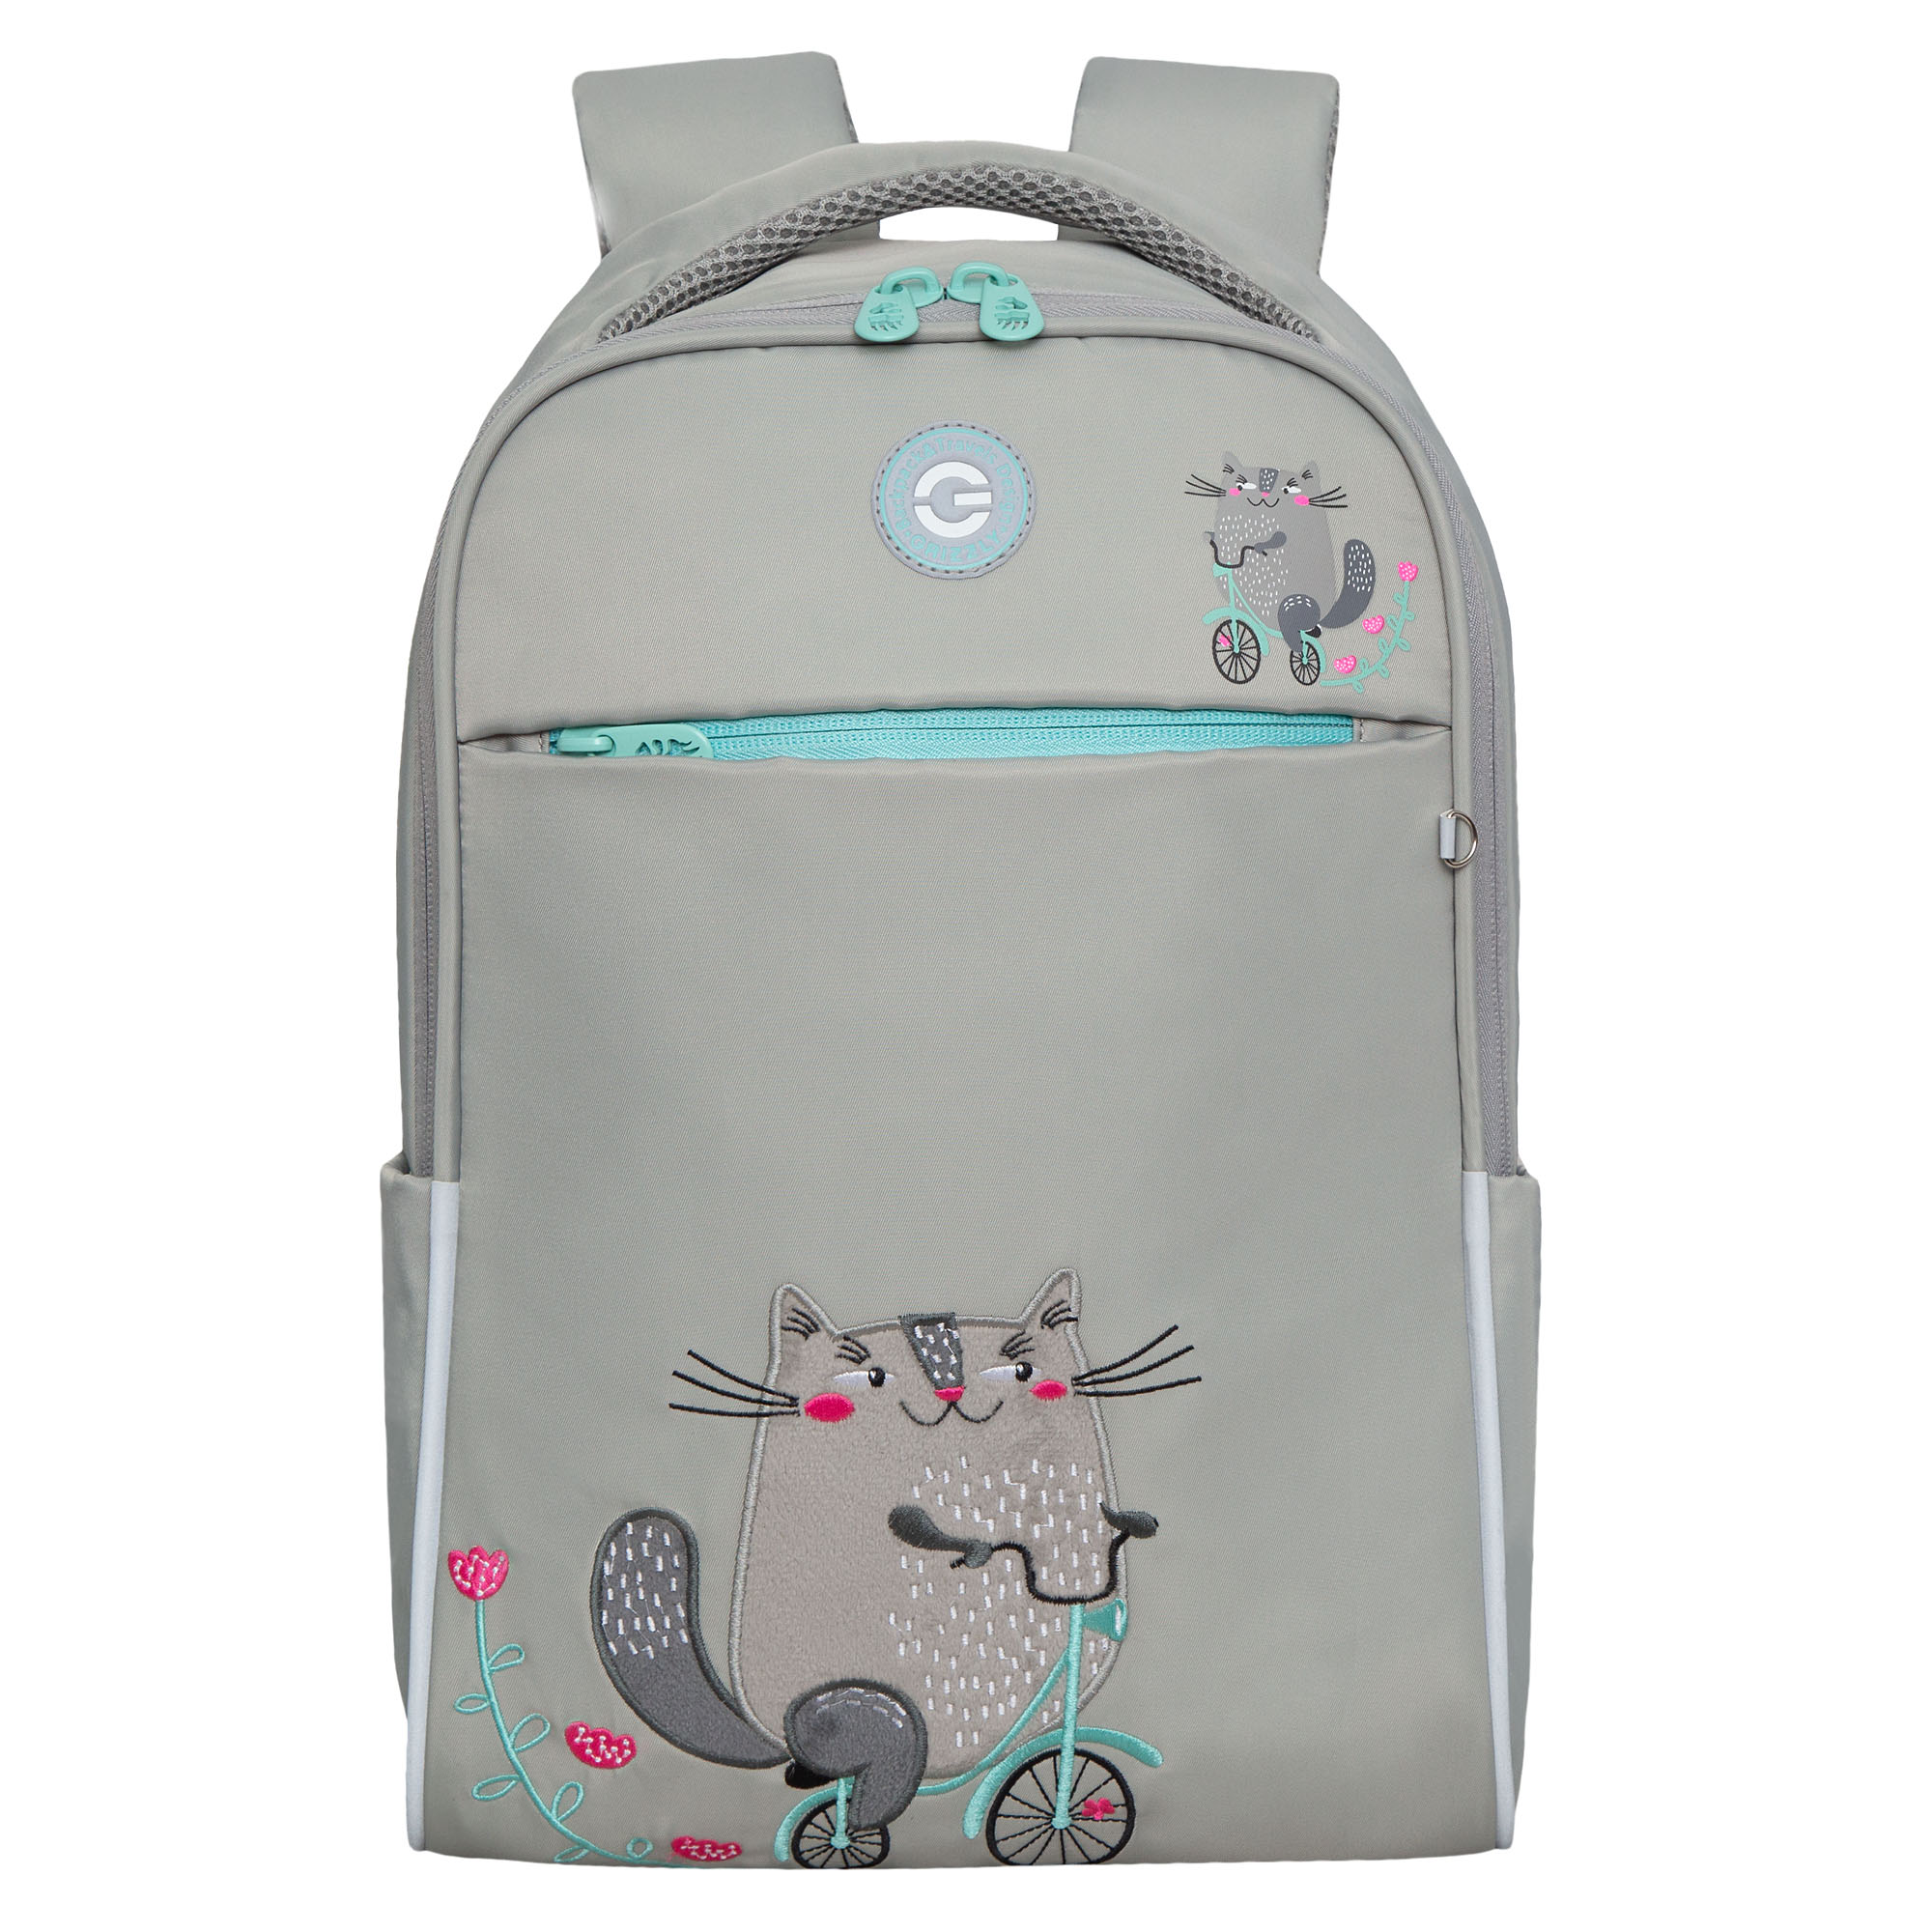 Рюкзак Grizzly школьный для девочки RG-367-3 2 серый рюкзак grizzly школьный для девочки rd 341 1 2